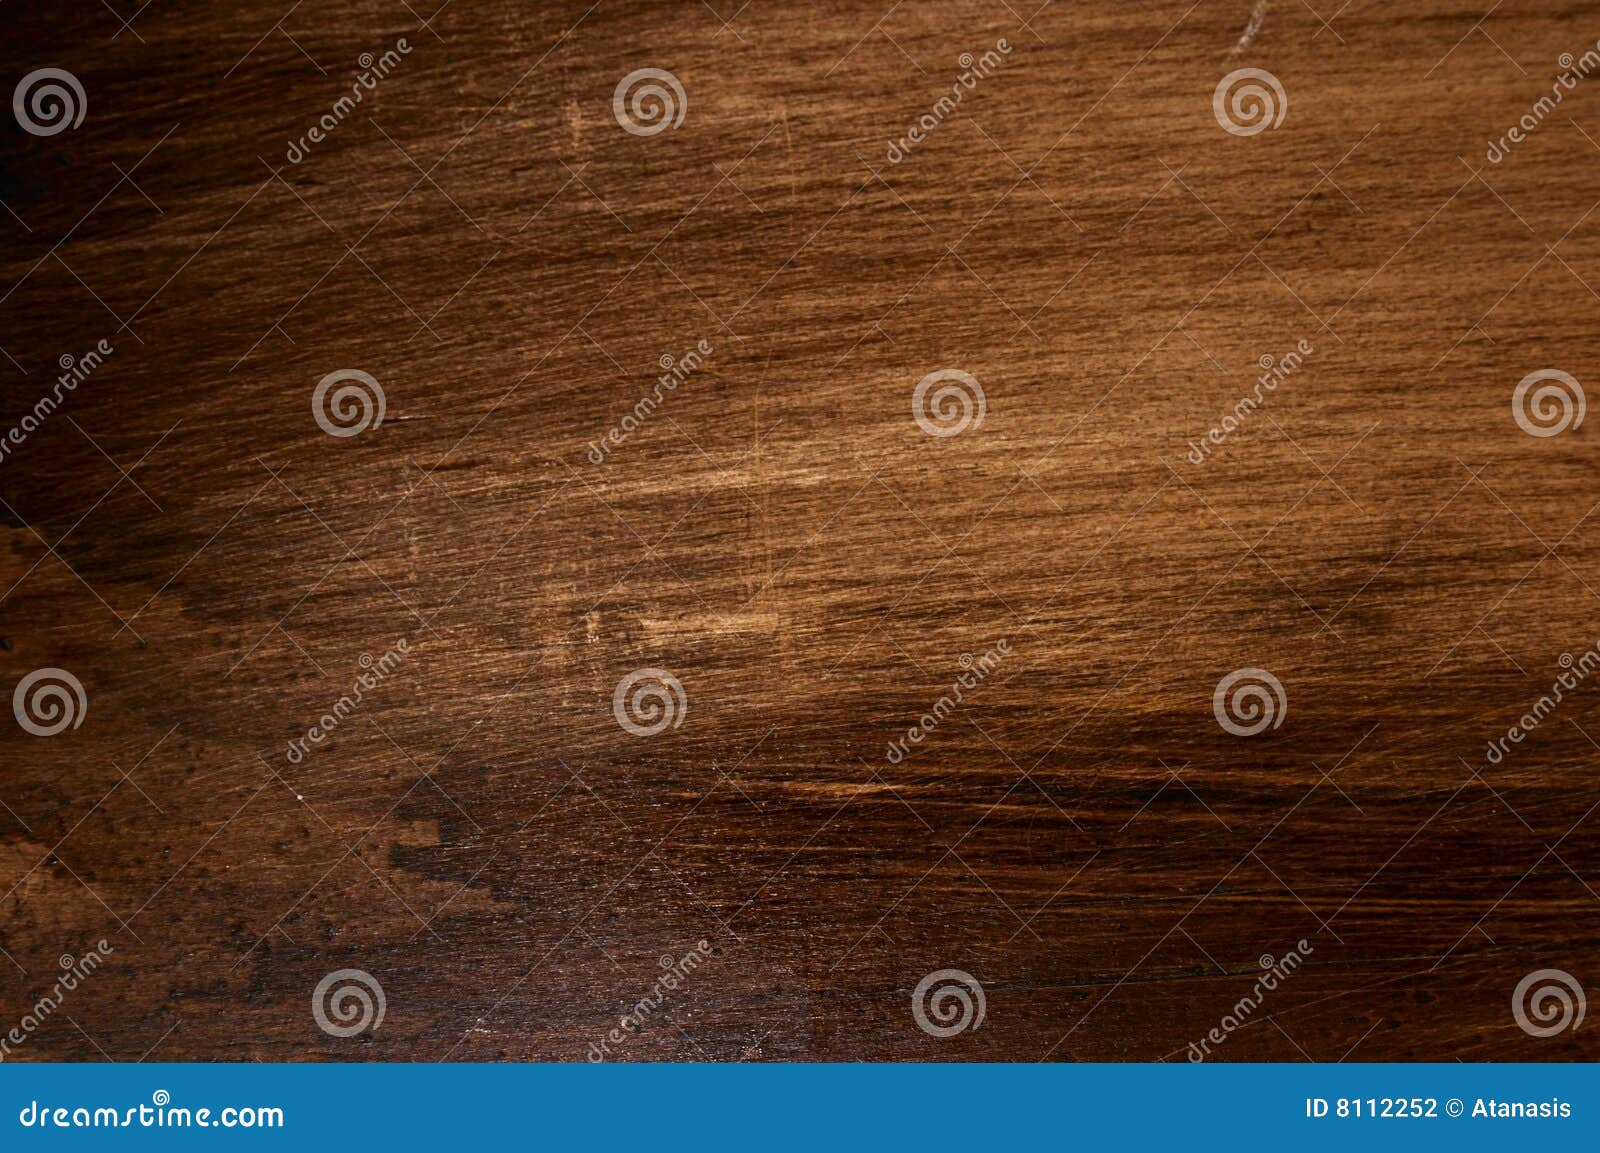 grainy dark wood surface